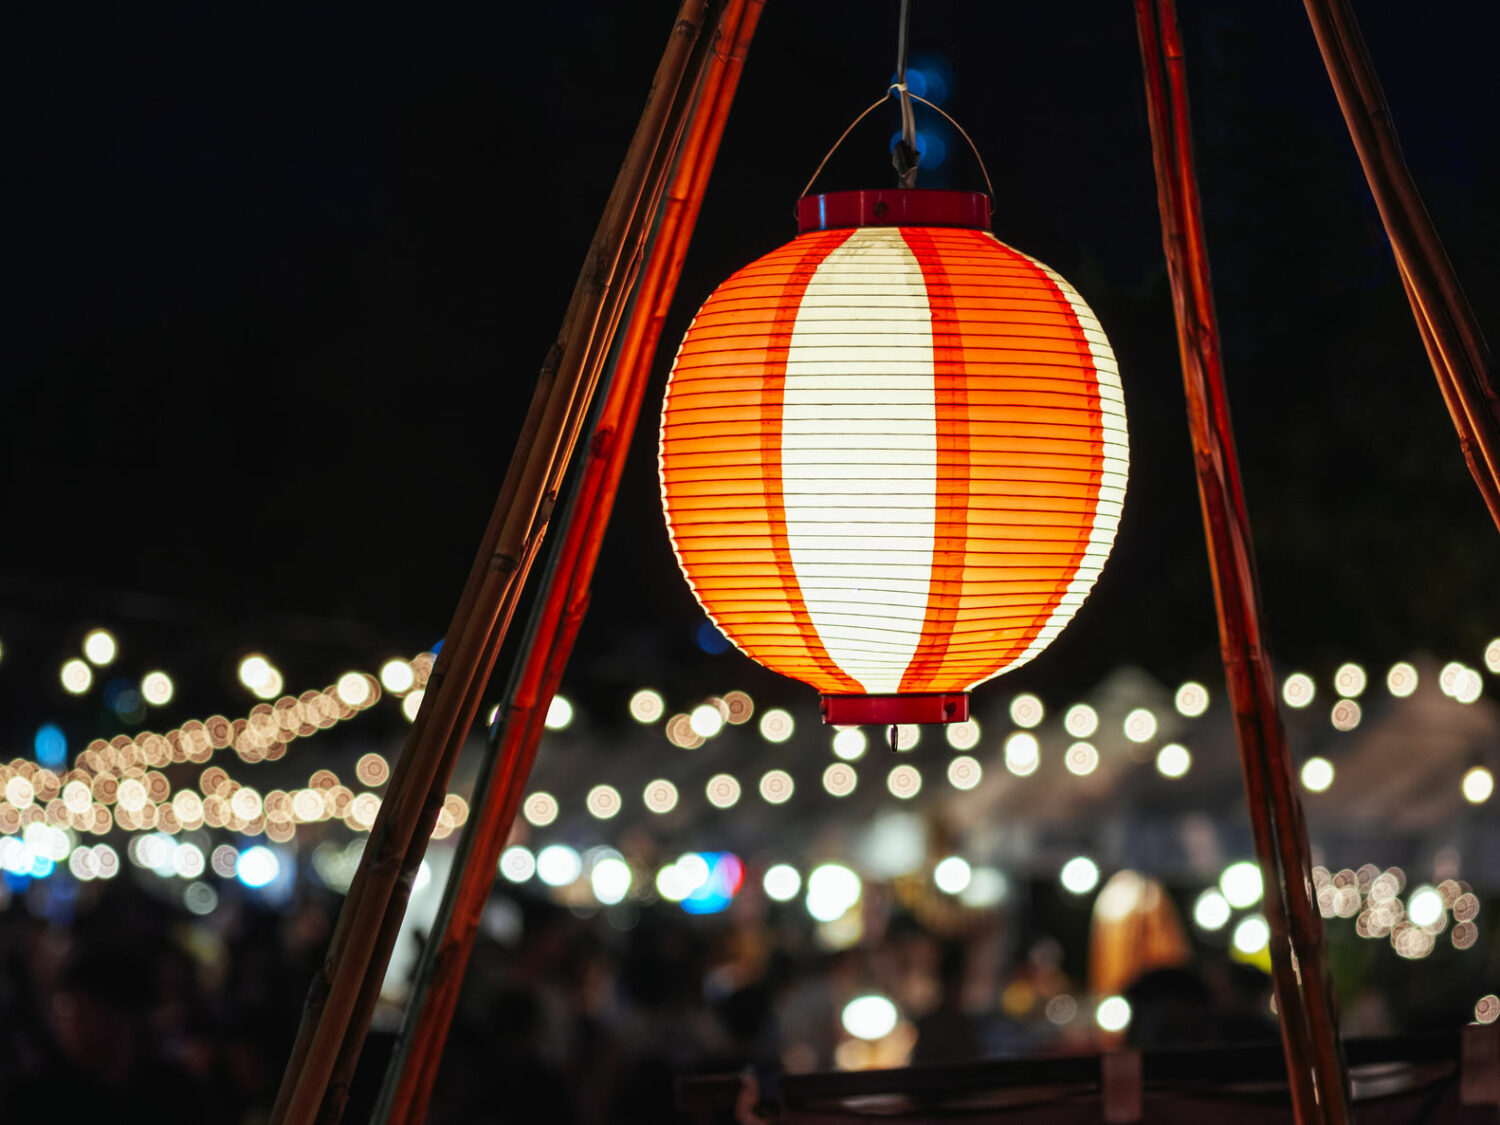 Japan Red Lantern decoration outdoor Festival Event party backgr